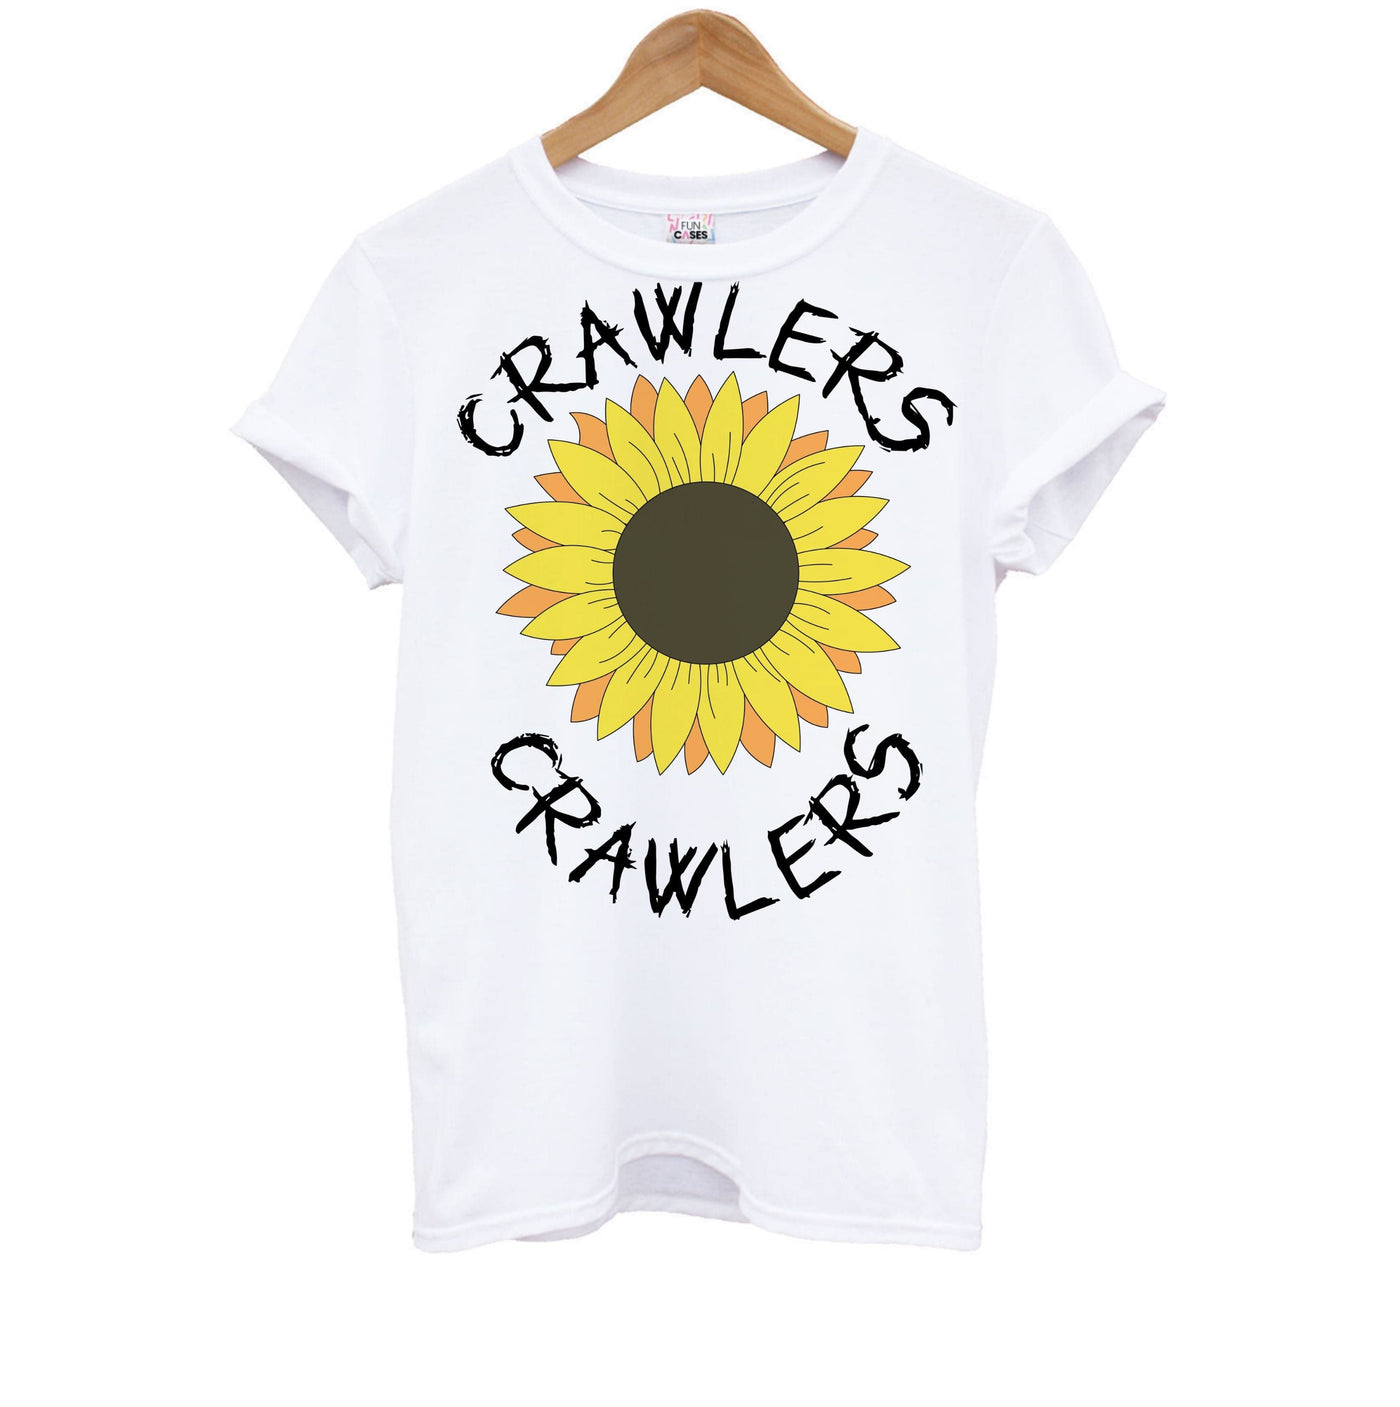 Crawlers - Festival Kids T-Shirt